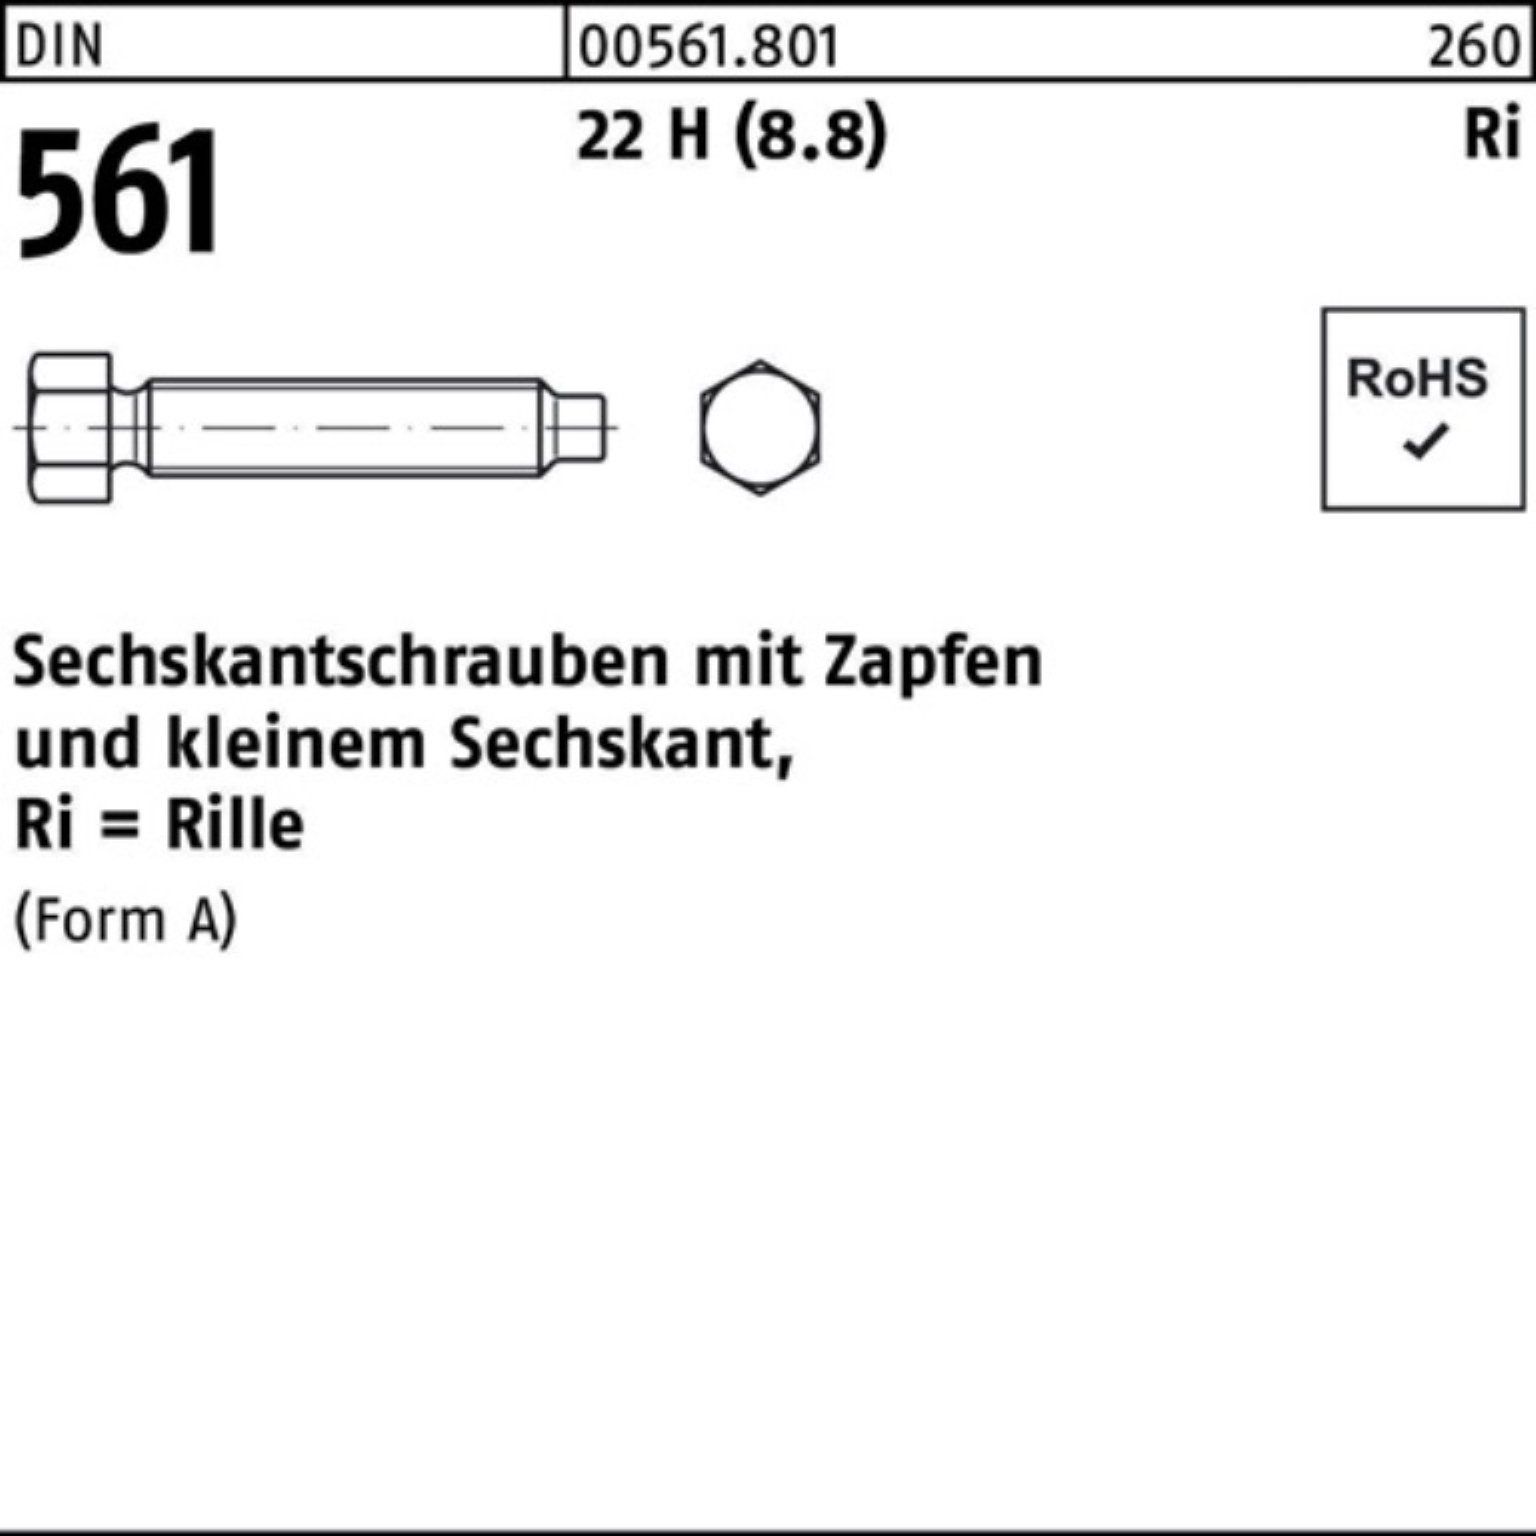 561 Sechskantschraube Reyher Zapfen DIN 60 10 Sechskantschraube H Pack (8.8) St 100er 22 AM 20x